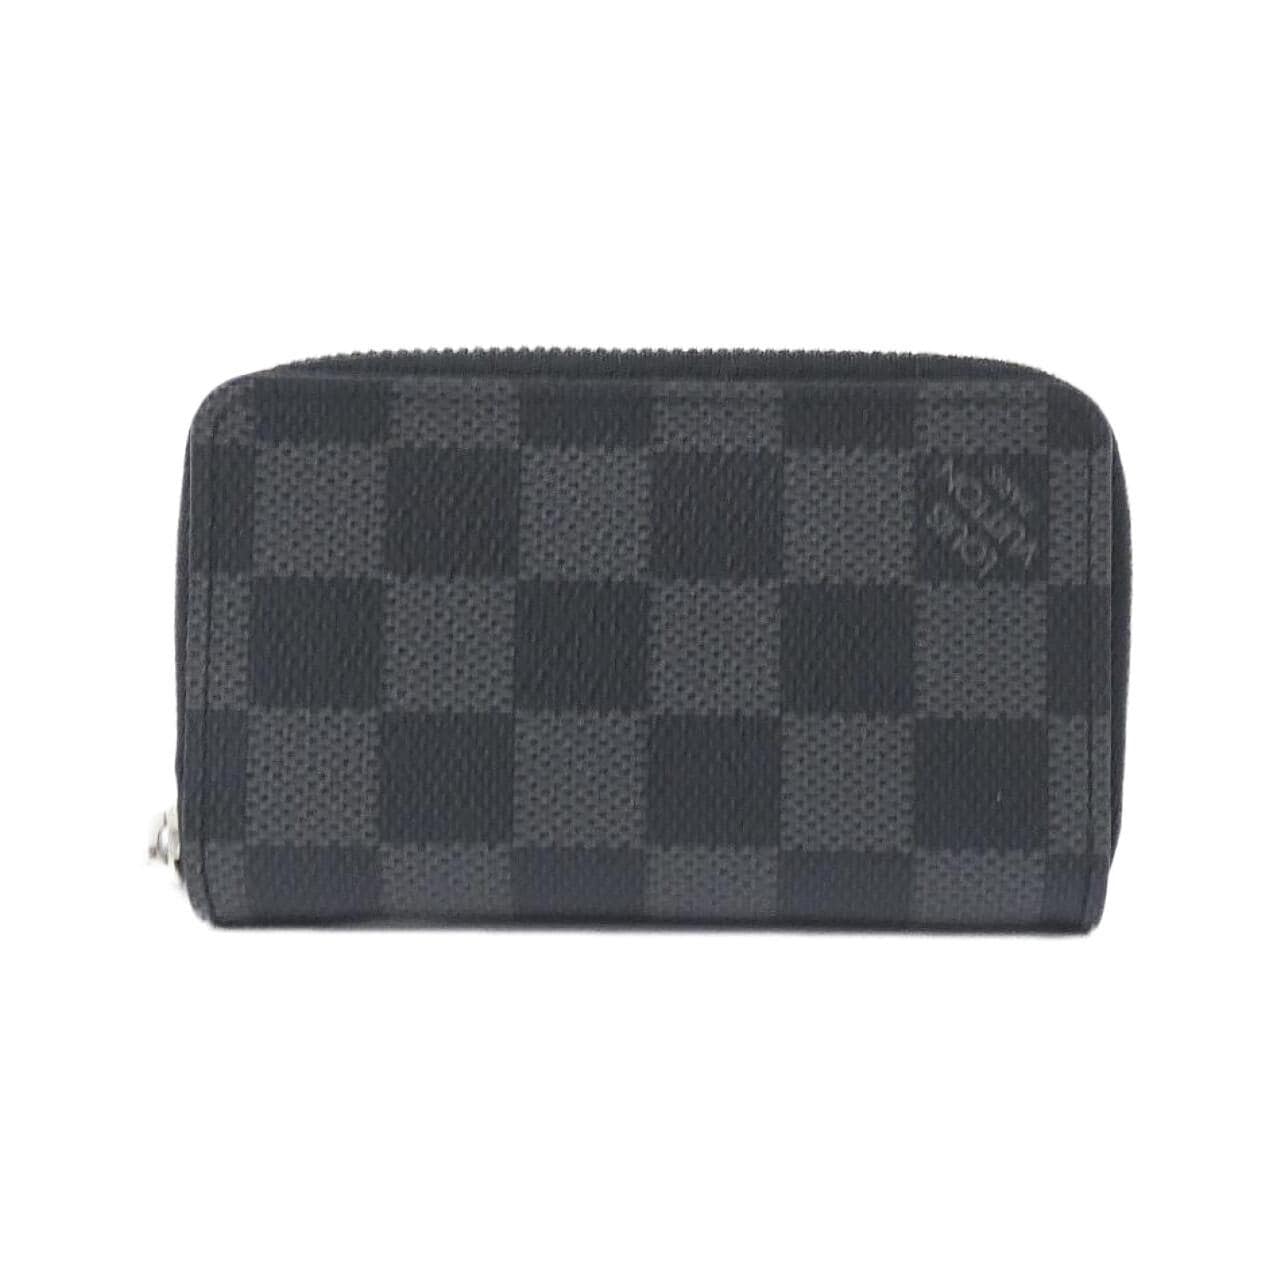 LOUIS VUITTON. Coin purse in black epi leather, Half moo… | Drouot.com